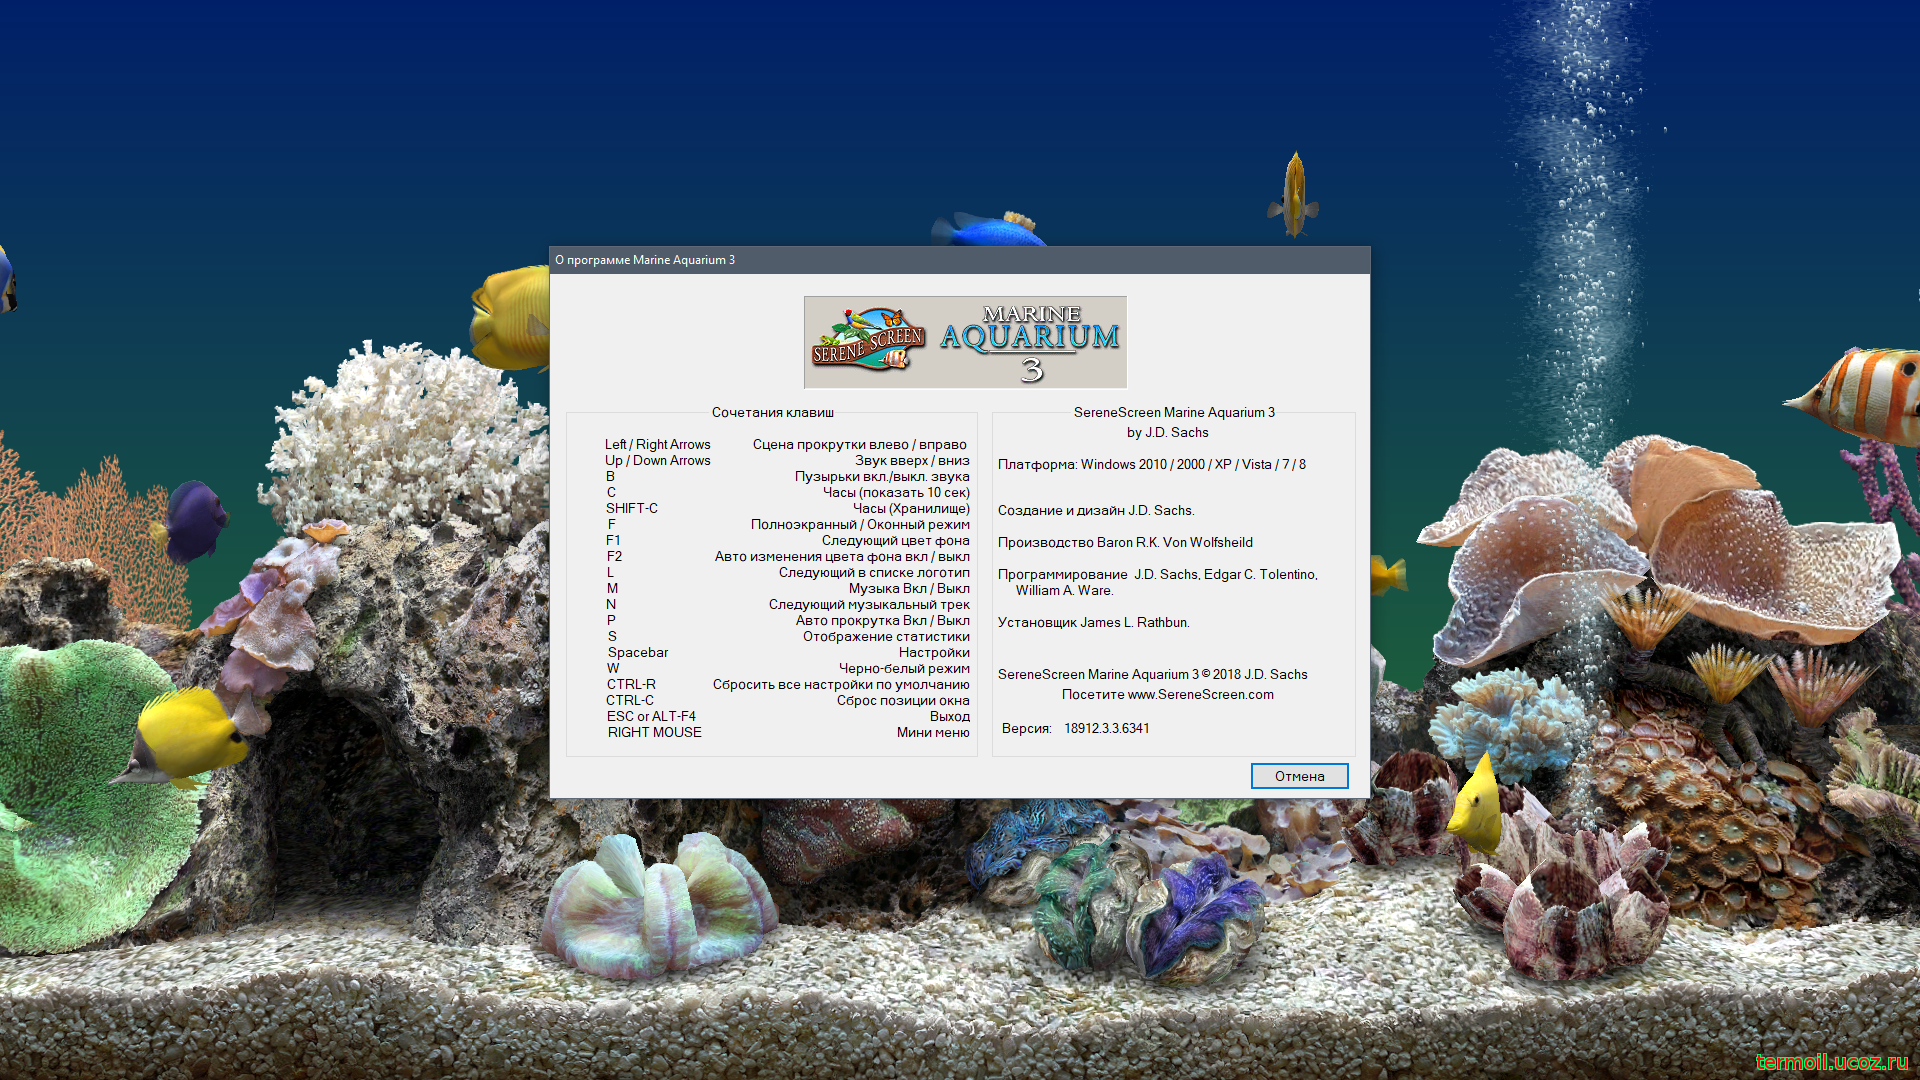 Аквариум на рабочий стол. Заставка Marine Aquarium 3. 3d аквариум на рабочий стол. Скринсейвер аквариум для Windows 10. Aquarium 3